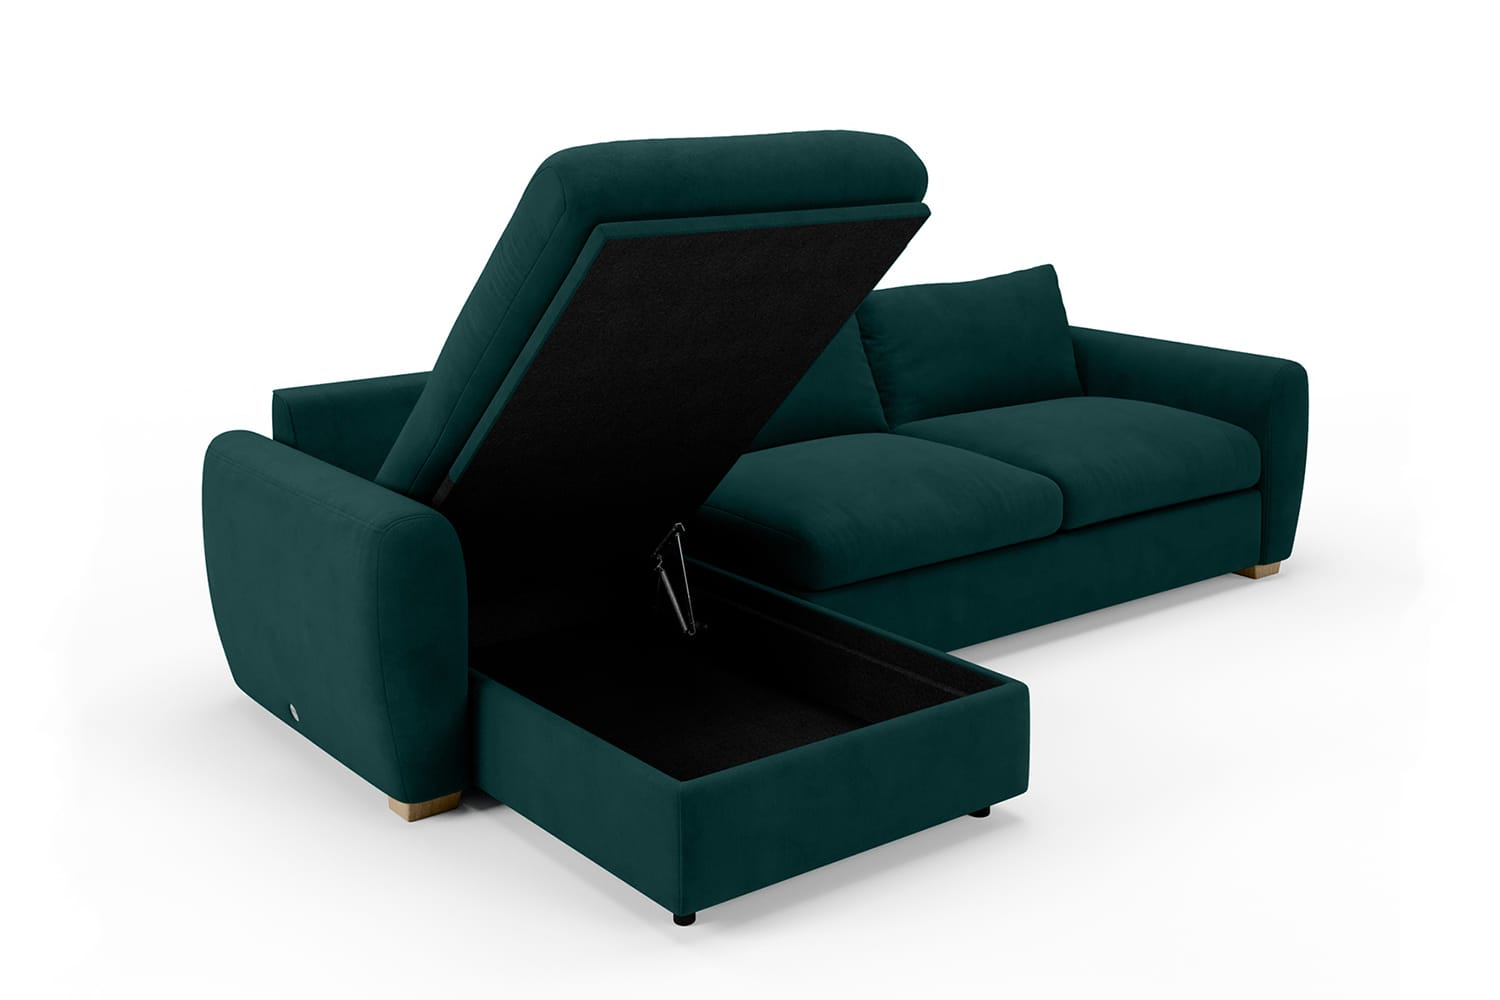 The Cloud Sundae - Chaise Sofa Bed - Pine Green